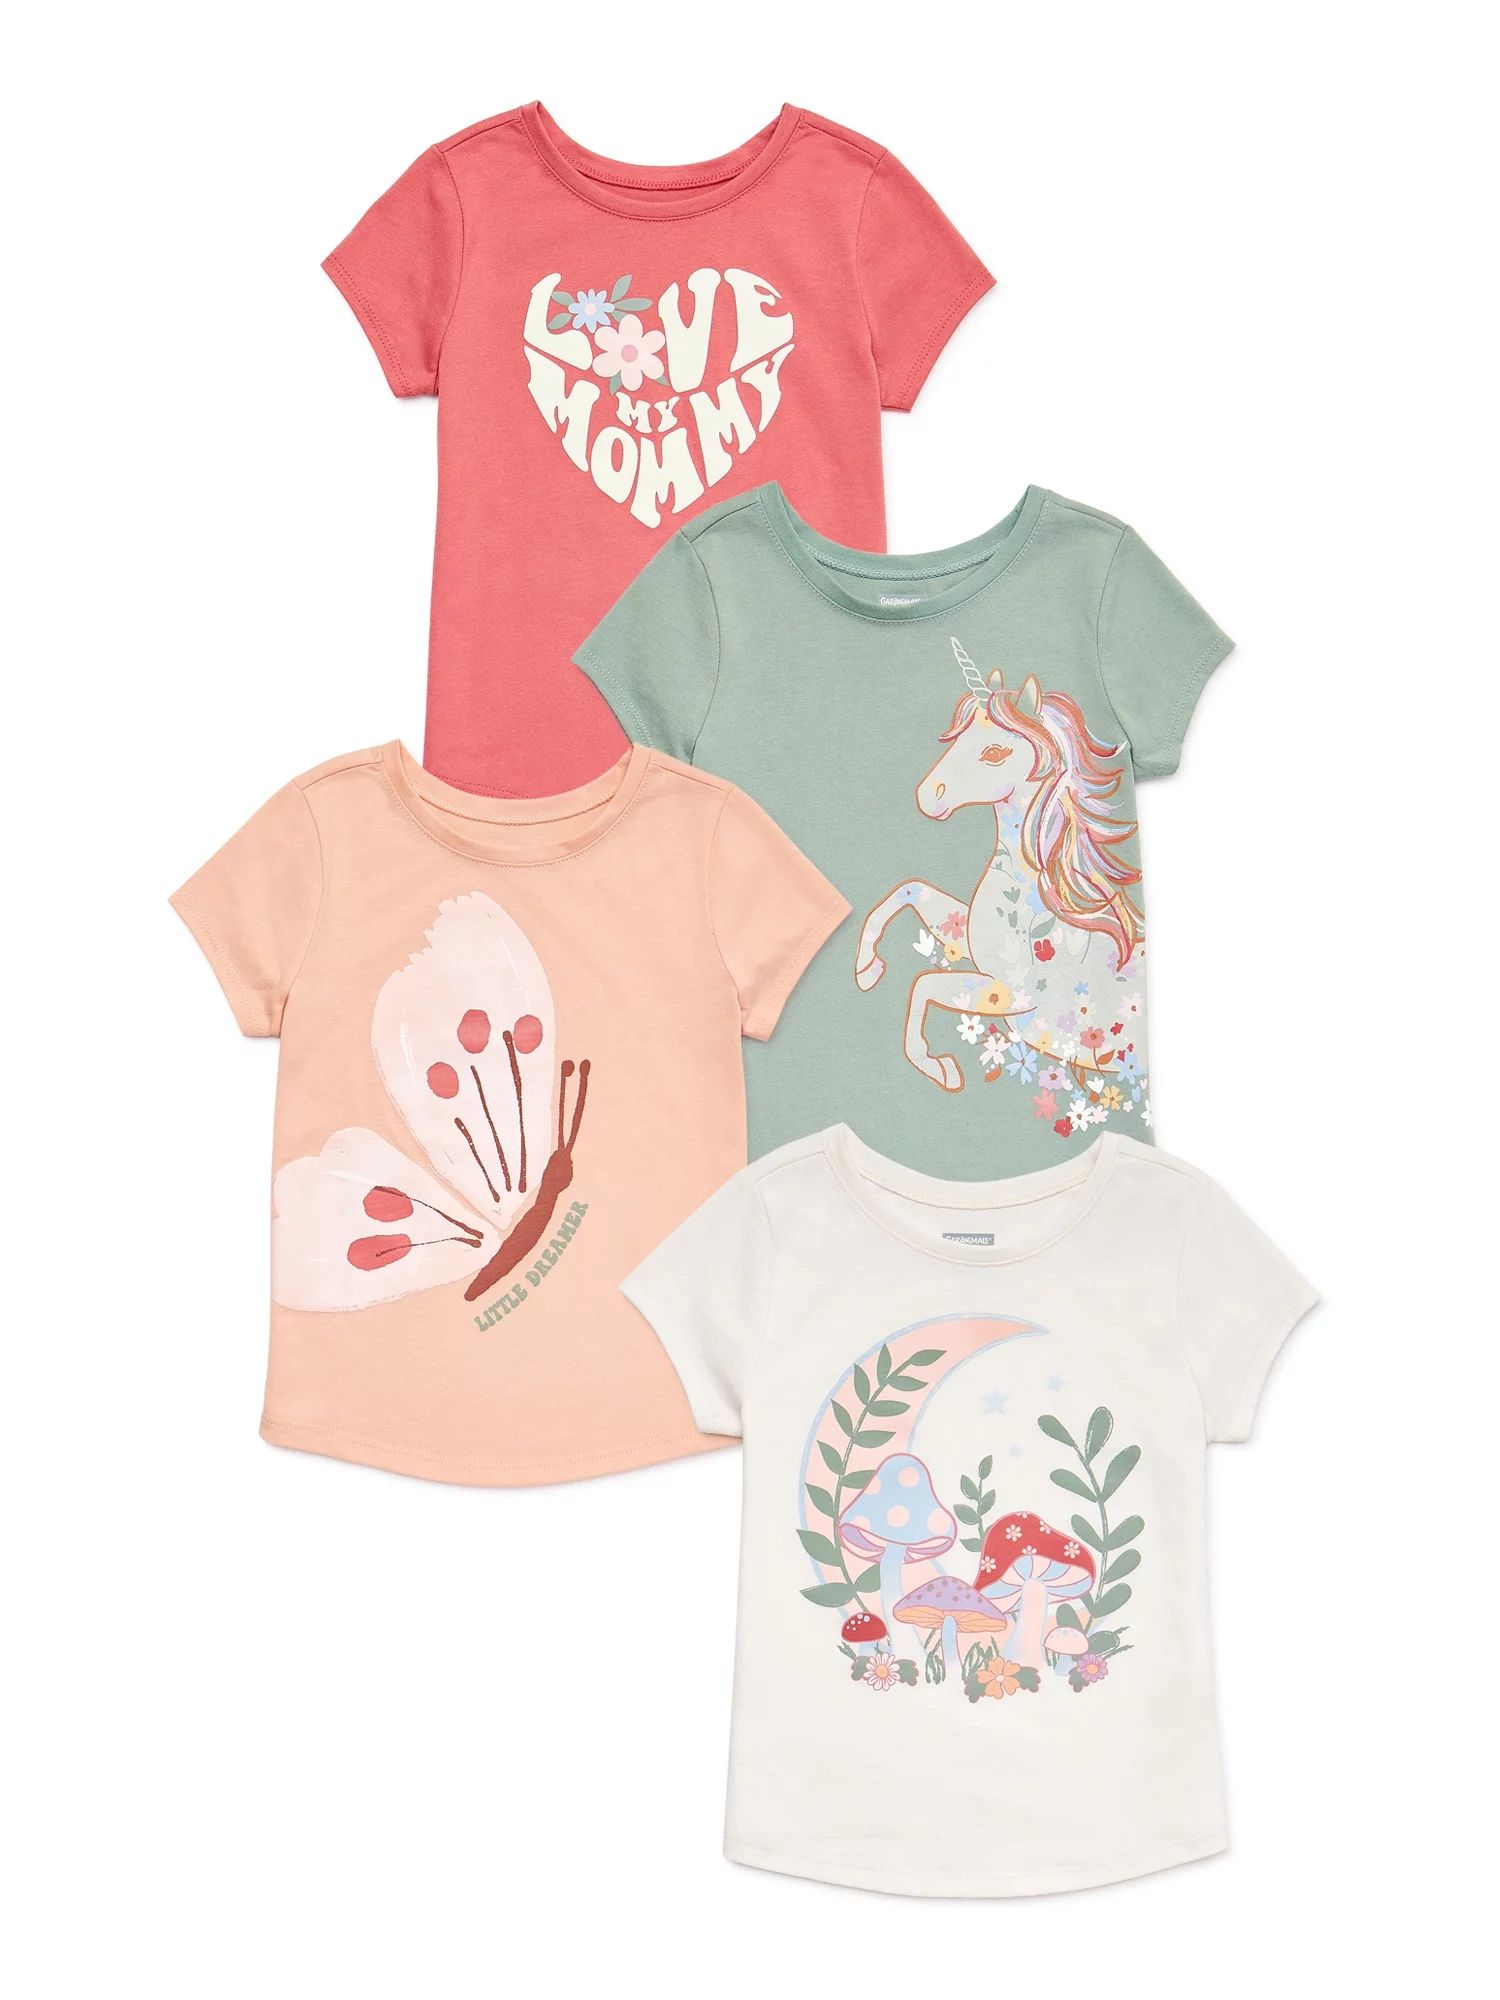 Garanimals Baby and Toddler Girls Short Sleeve Graphic Tee, 4-Pack, Sizes 12 Months-5T | Walmart (US)